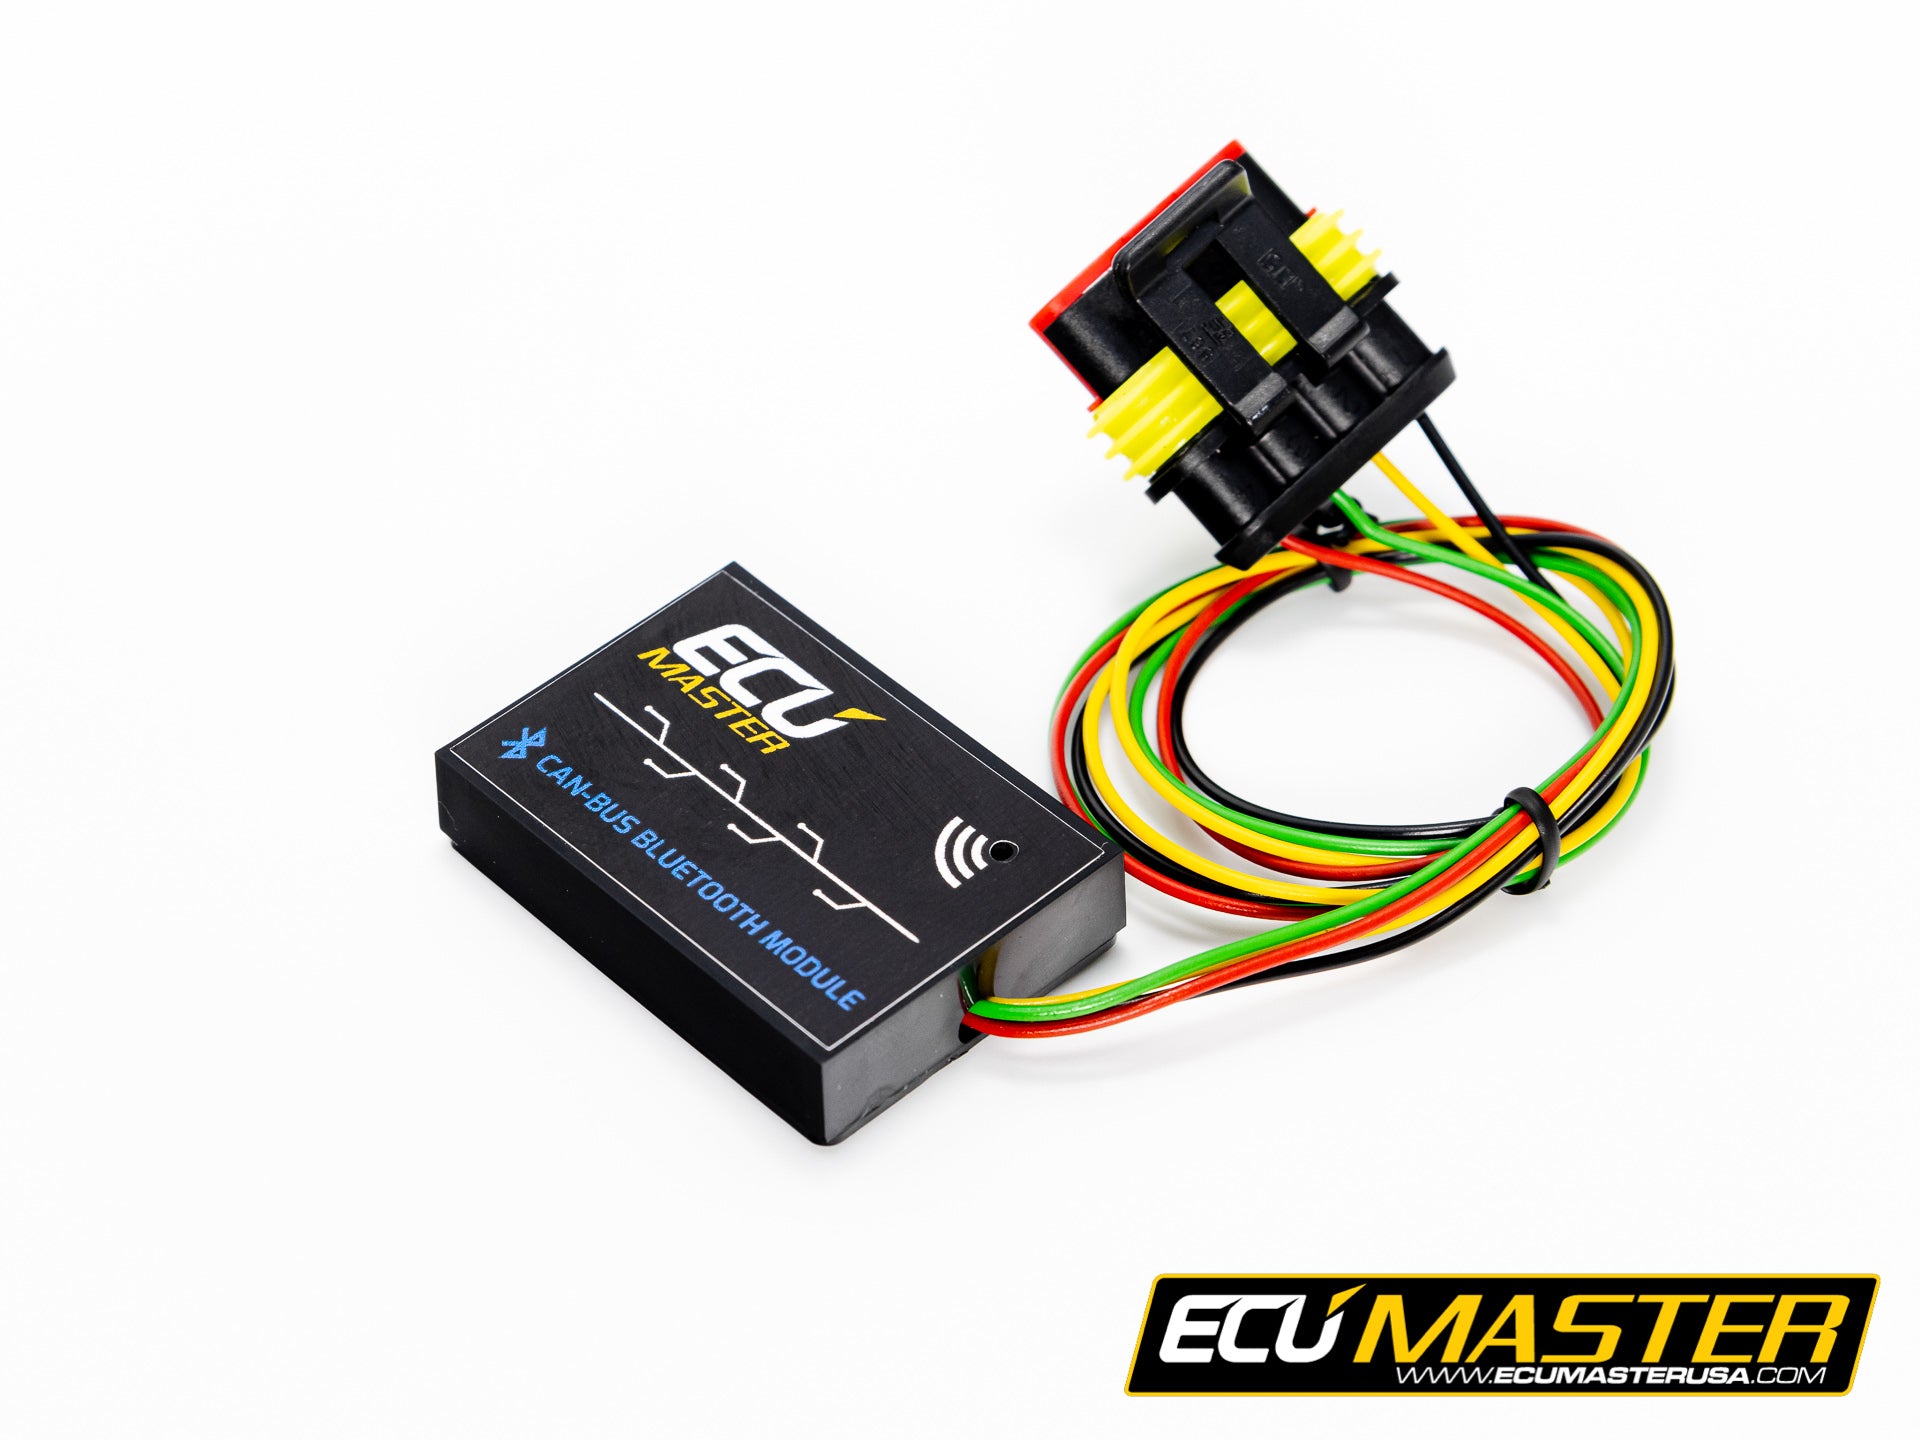 Schat klink garage Bluetooth Adapter for ECUMaster EMU Black (CAN Bus) – ECUMaster USA